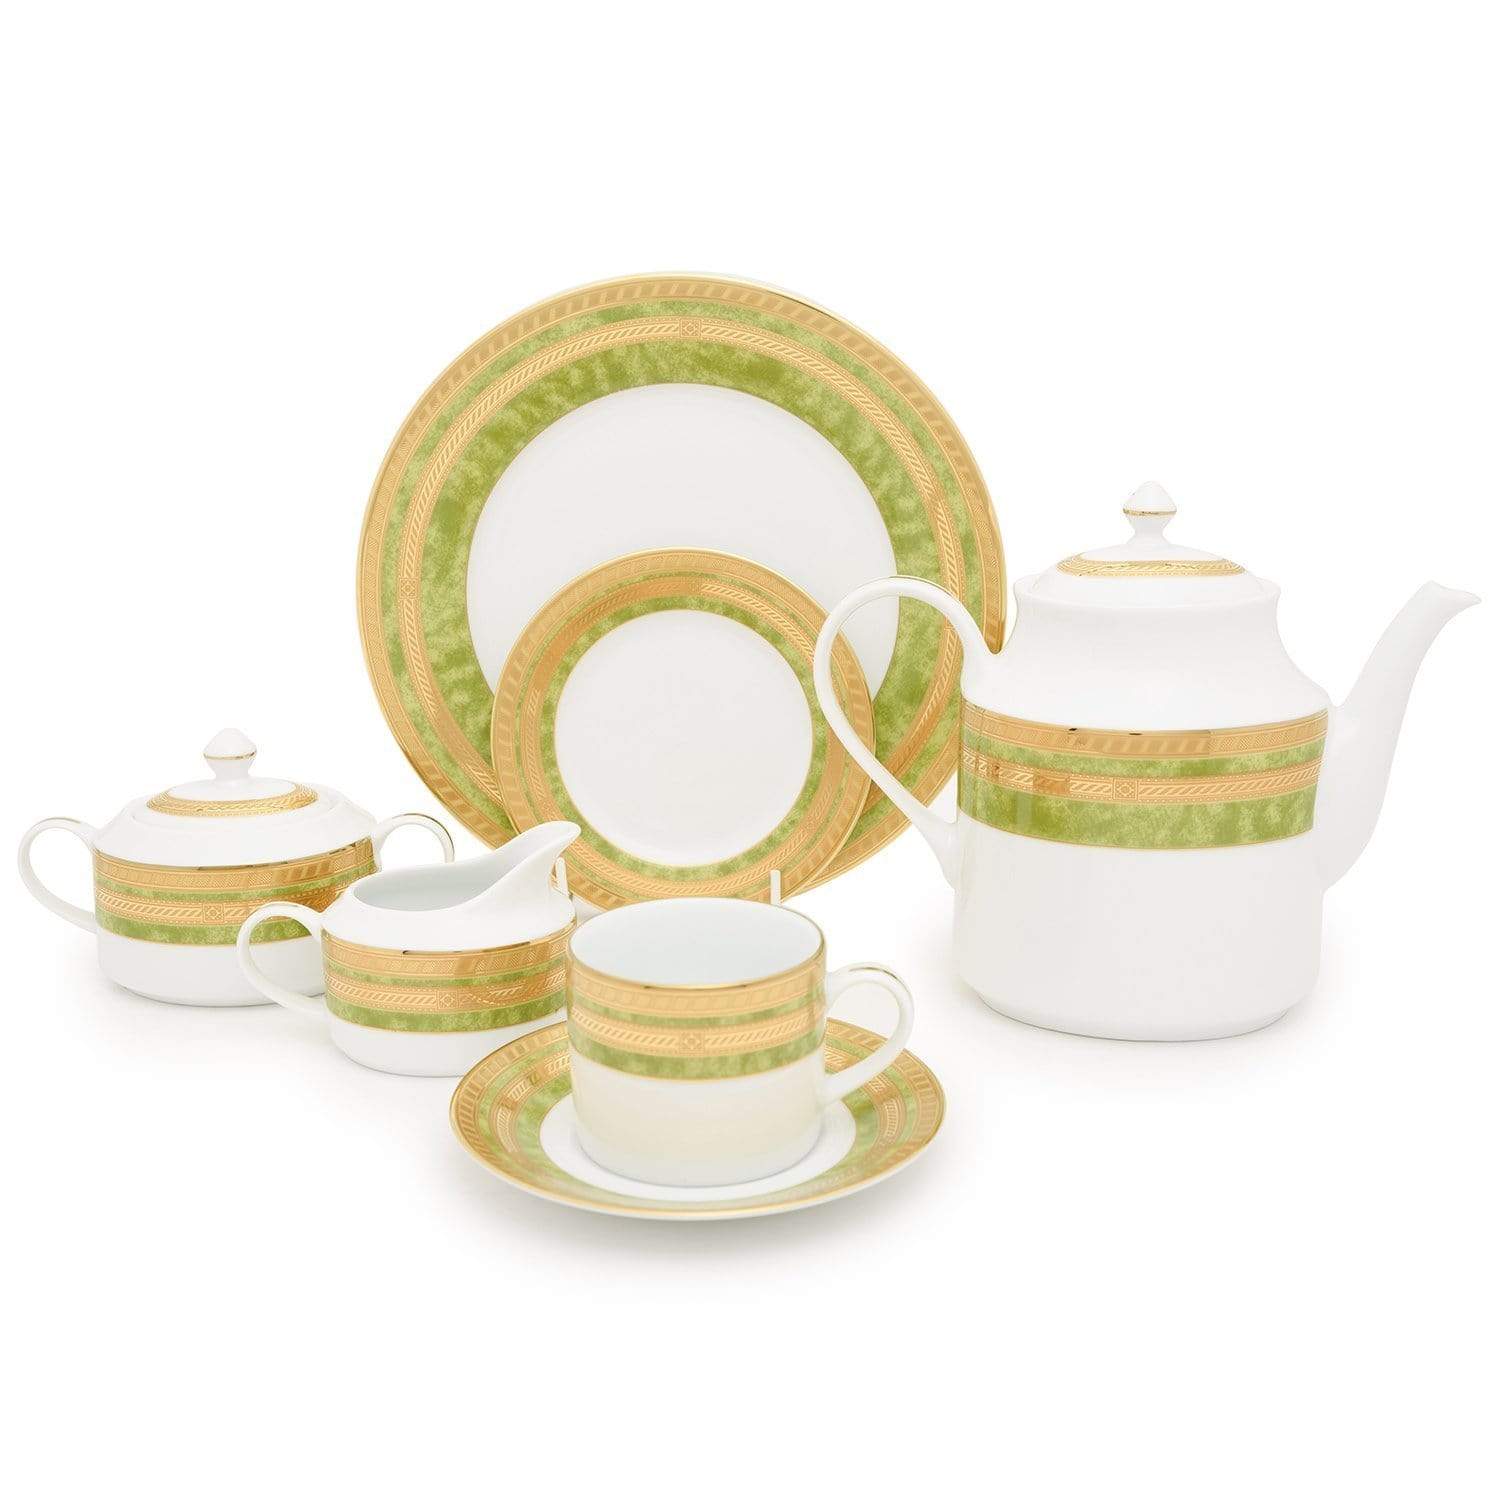 Dankotuwa Porcelain Berlinda Tea Set - Light Green and Gold, 24 Piece - BERGRN-24TS - Jashanmal Home